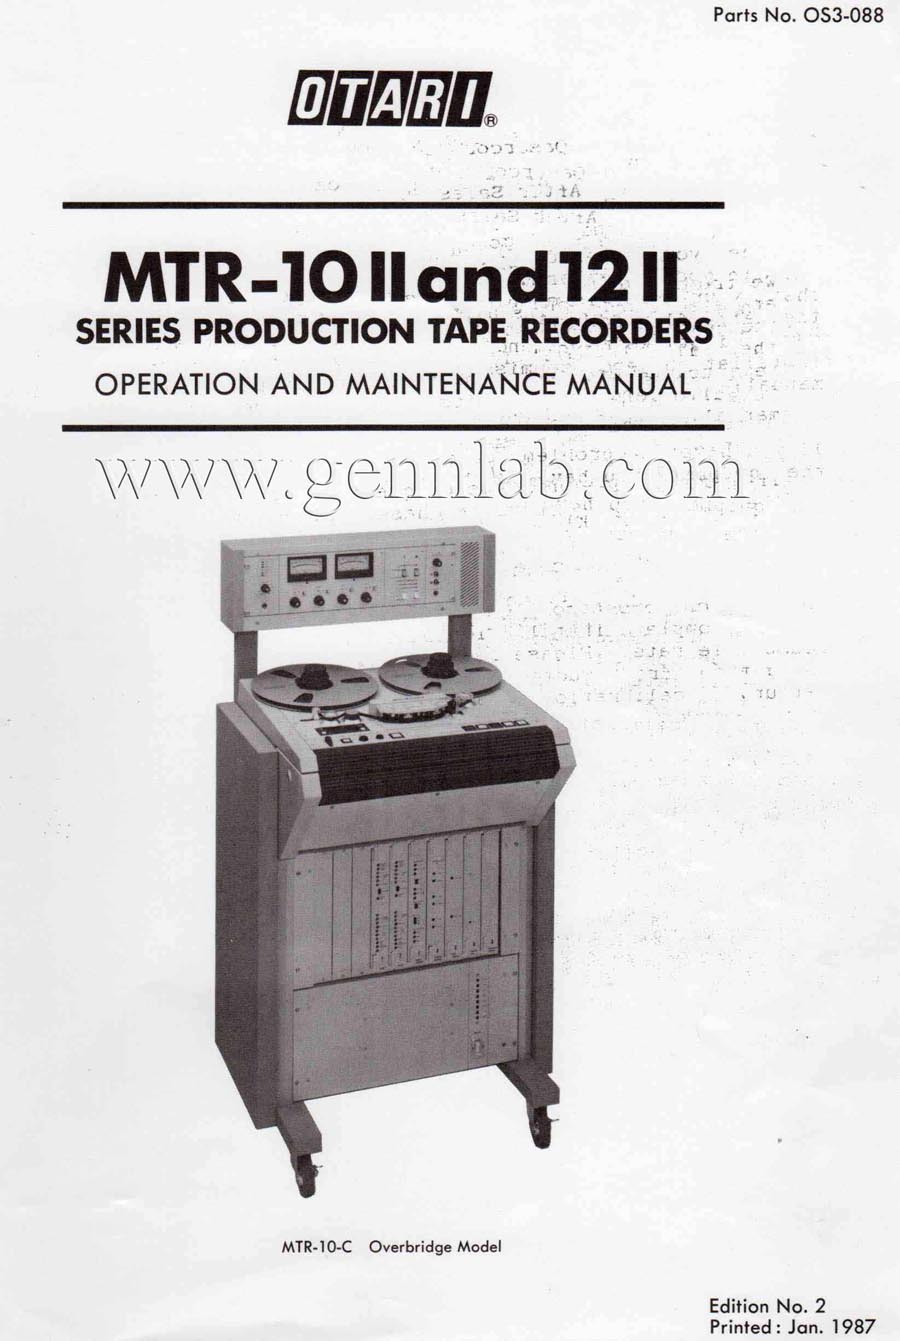 OTARI MTR-10 II and 12 II Service Manual